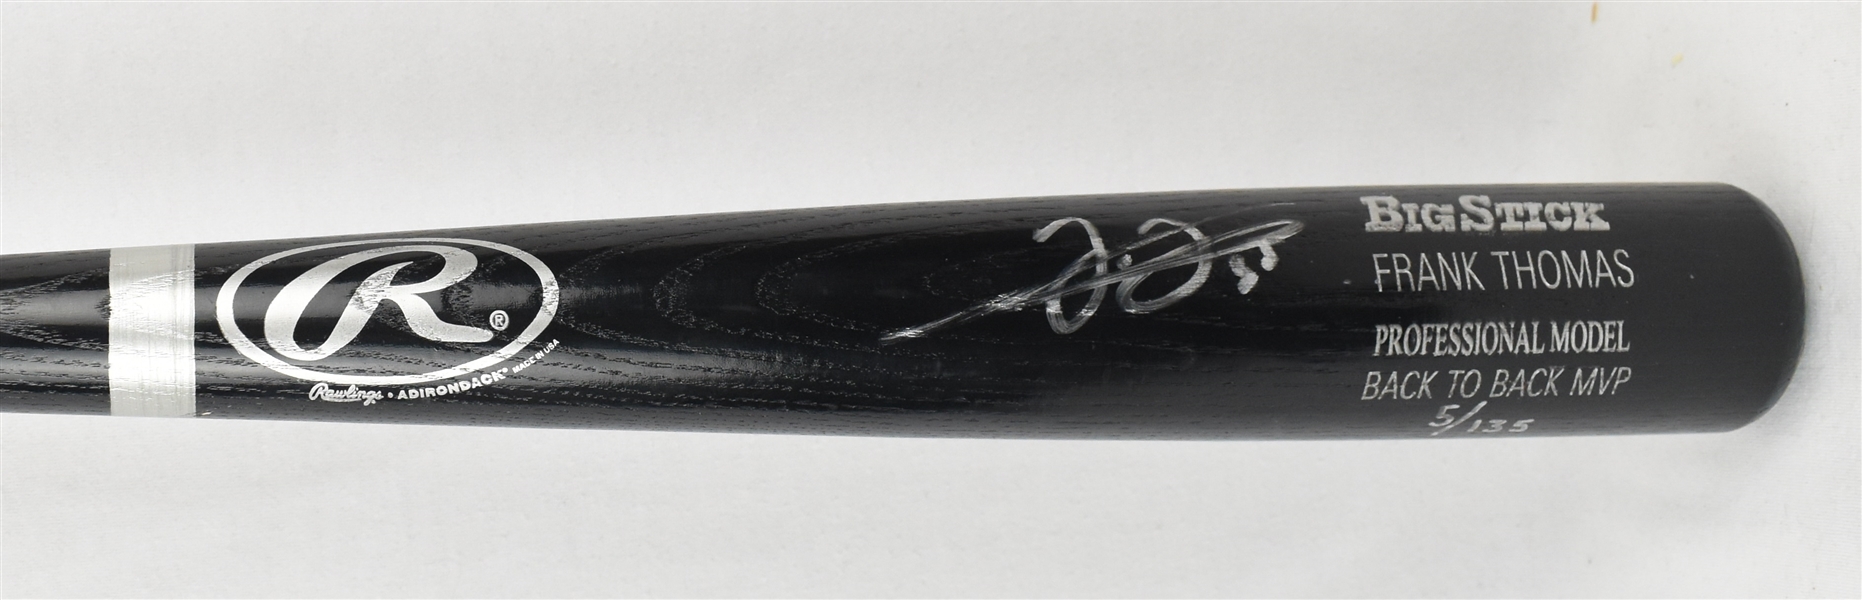 Frank Thomas Autographed Limited Edition MVP Bat #5/135